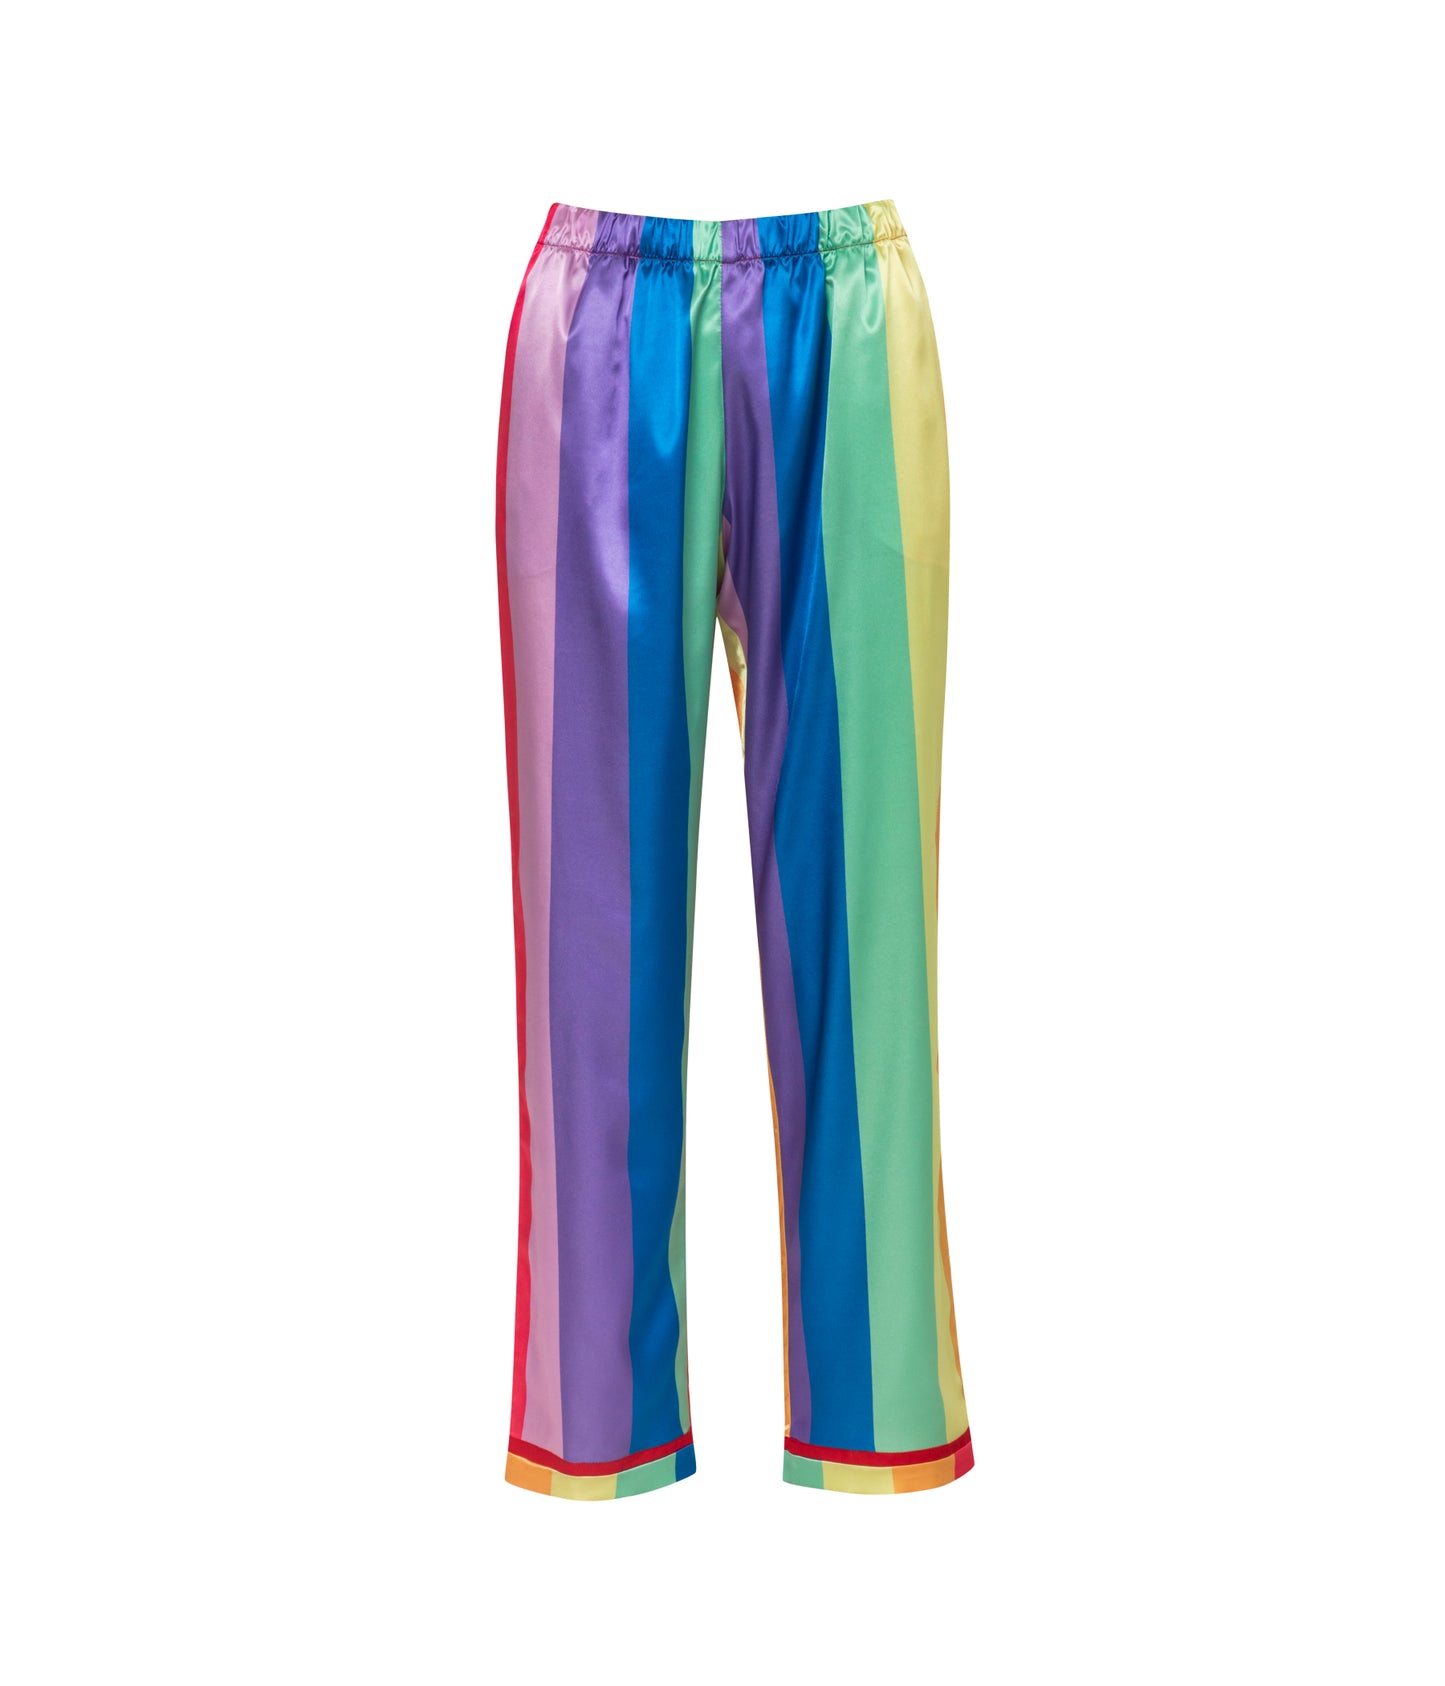 Verdelimon - Pants - Maui - Printed - Rainbow - Front